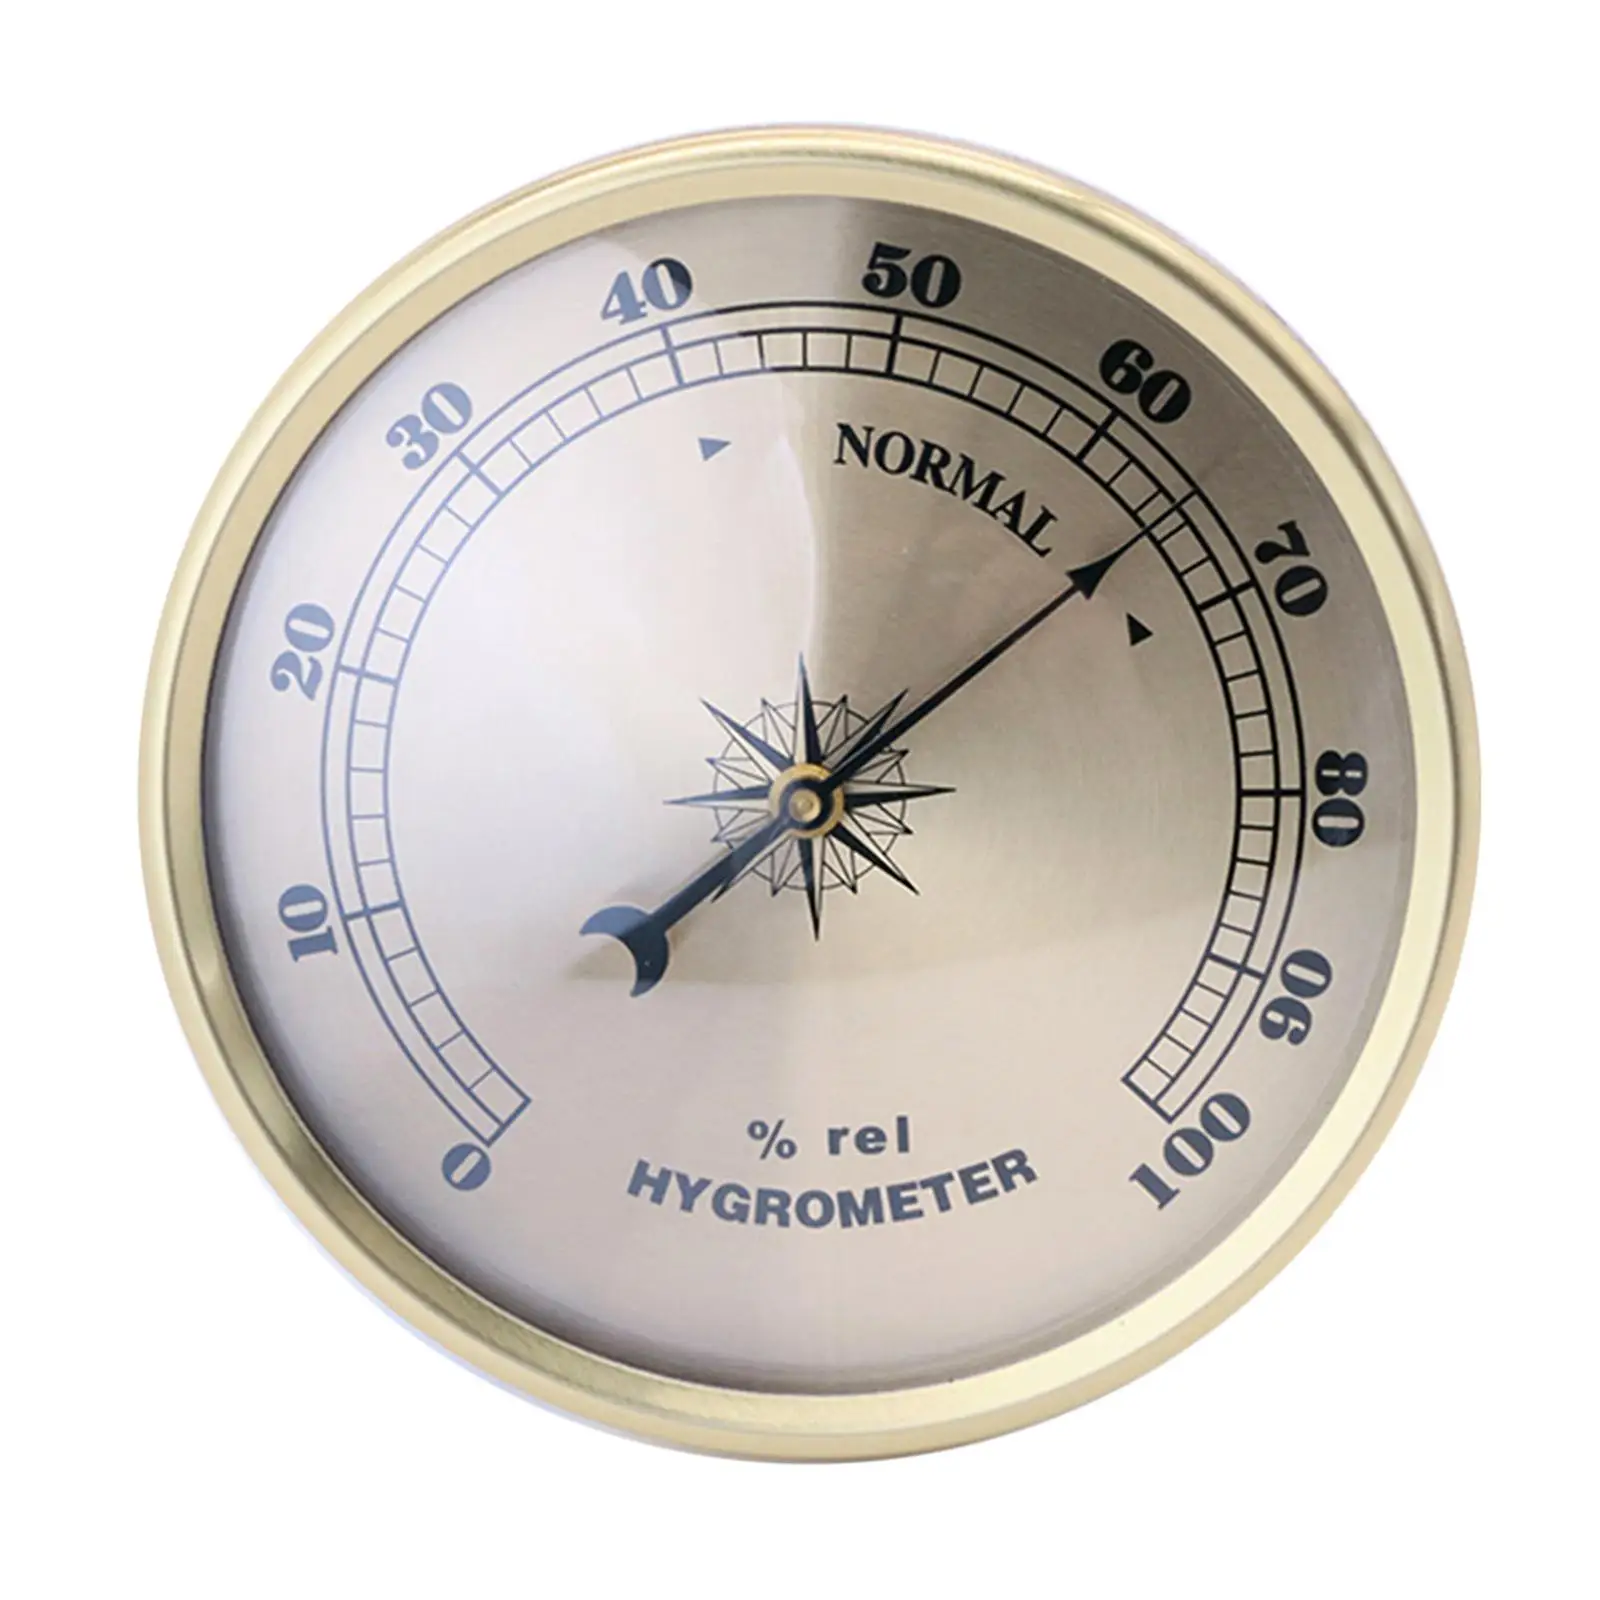 

Mini Metal Hygrometer Incubator Humidity Meter Humidity Monitor for Indoor Outdoor Household Humidors Cellar Fridge Closet